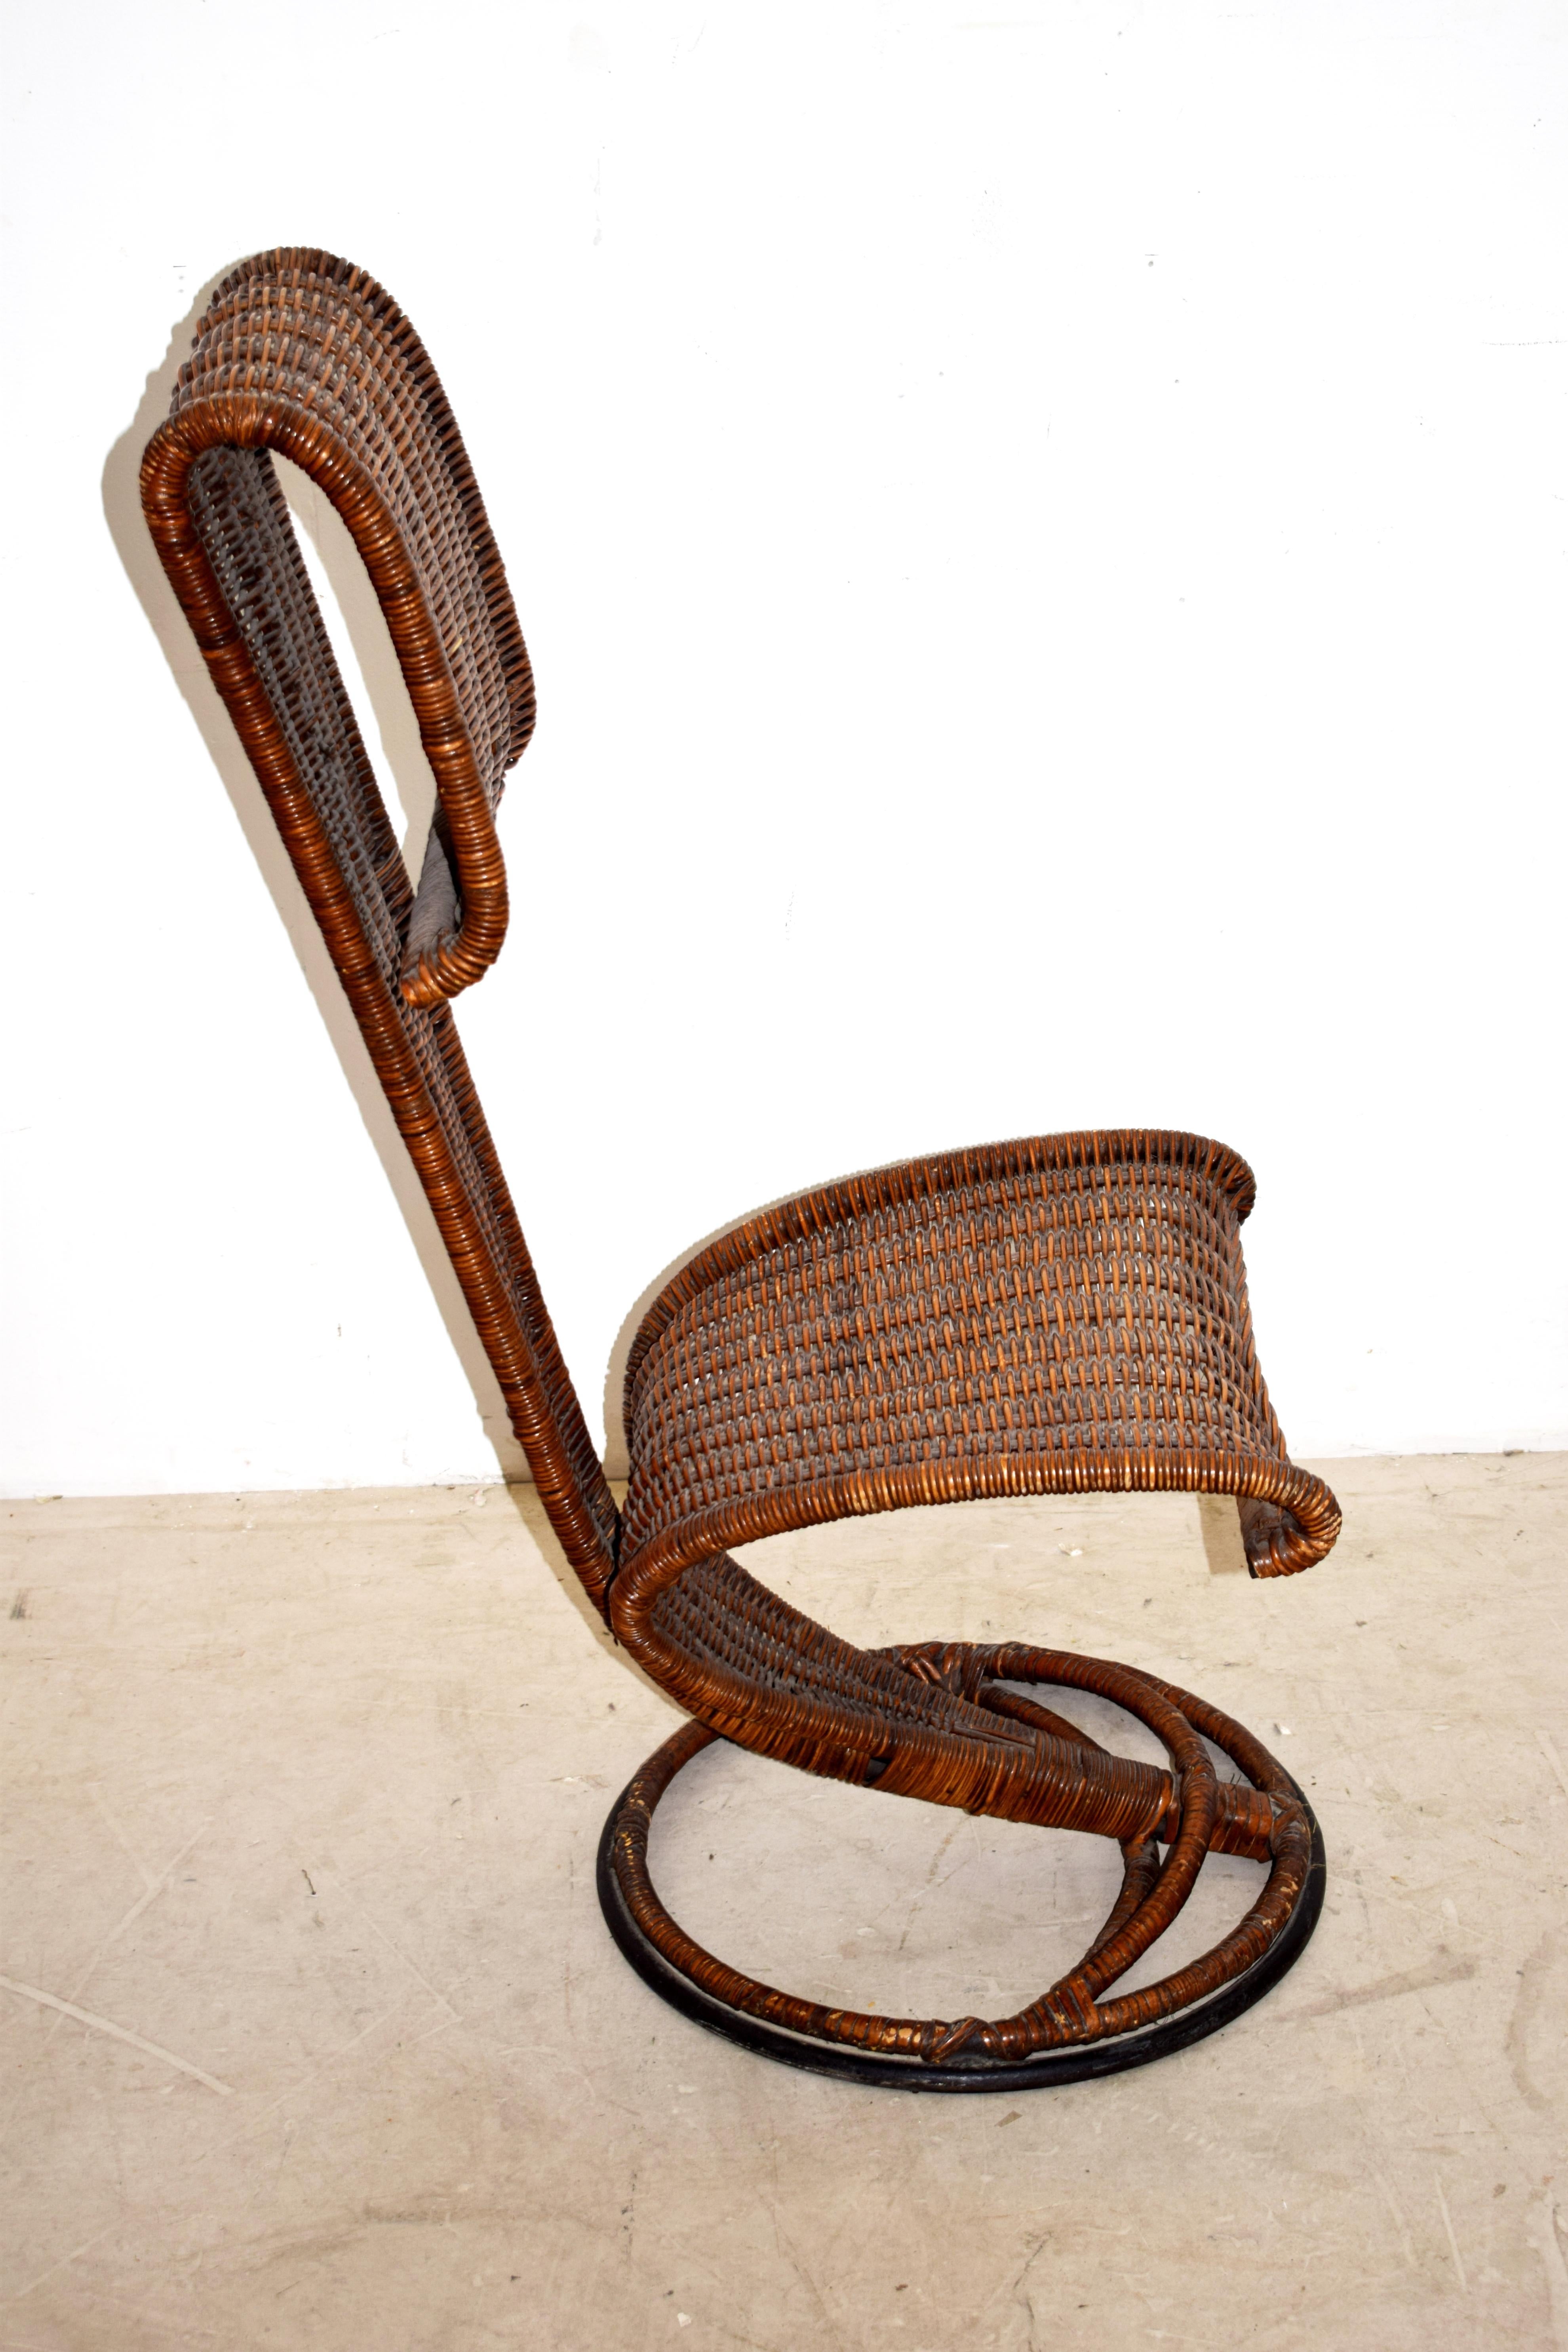 Italian chair by Marzio Cecchi attributed, 1960s.
Dimensions: H= 93 cm; W= 42 cm; D= 55 cm; Height seat = 42 cm.